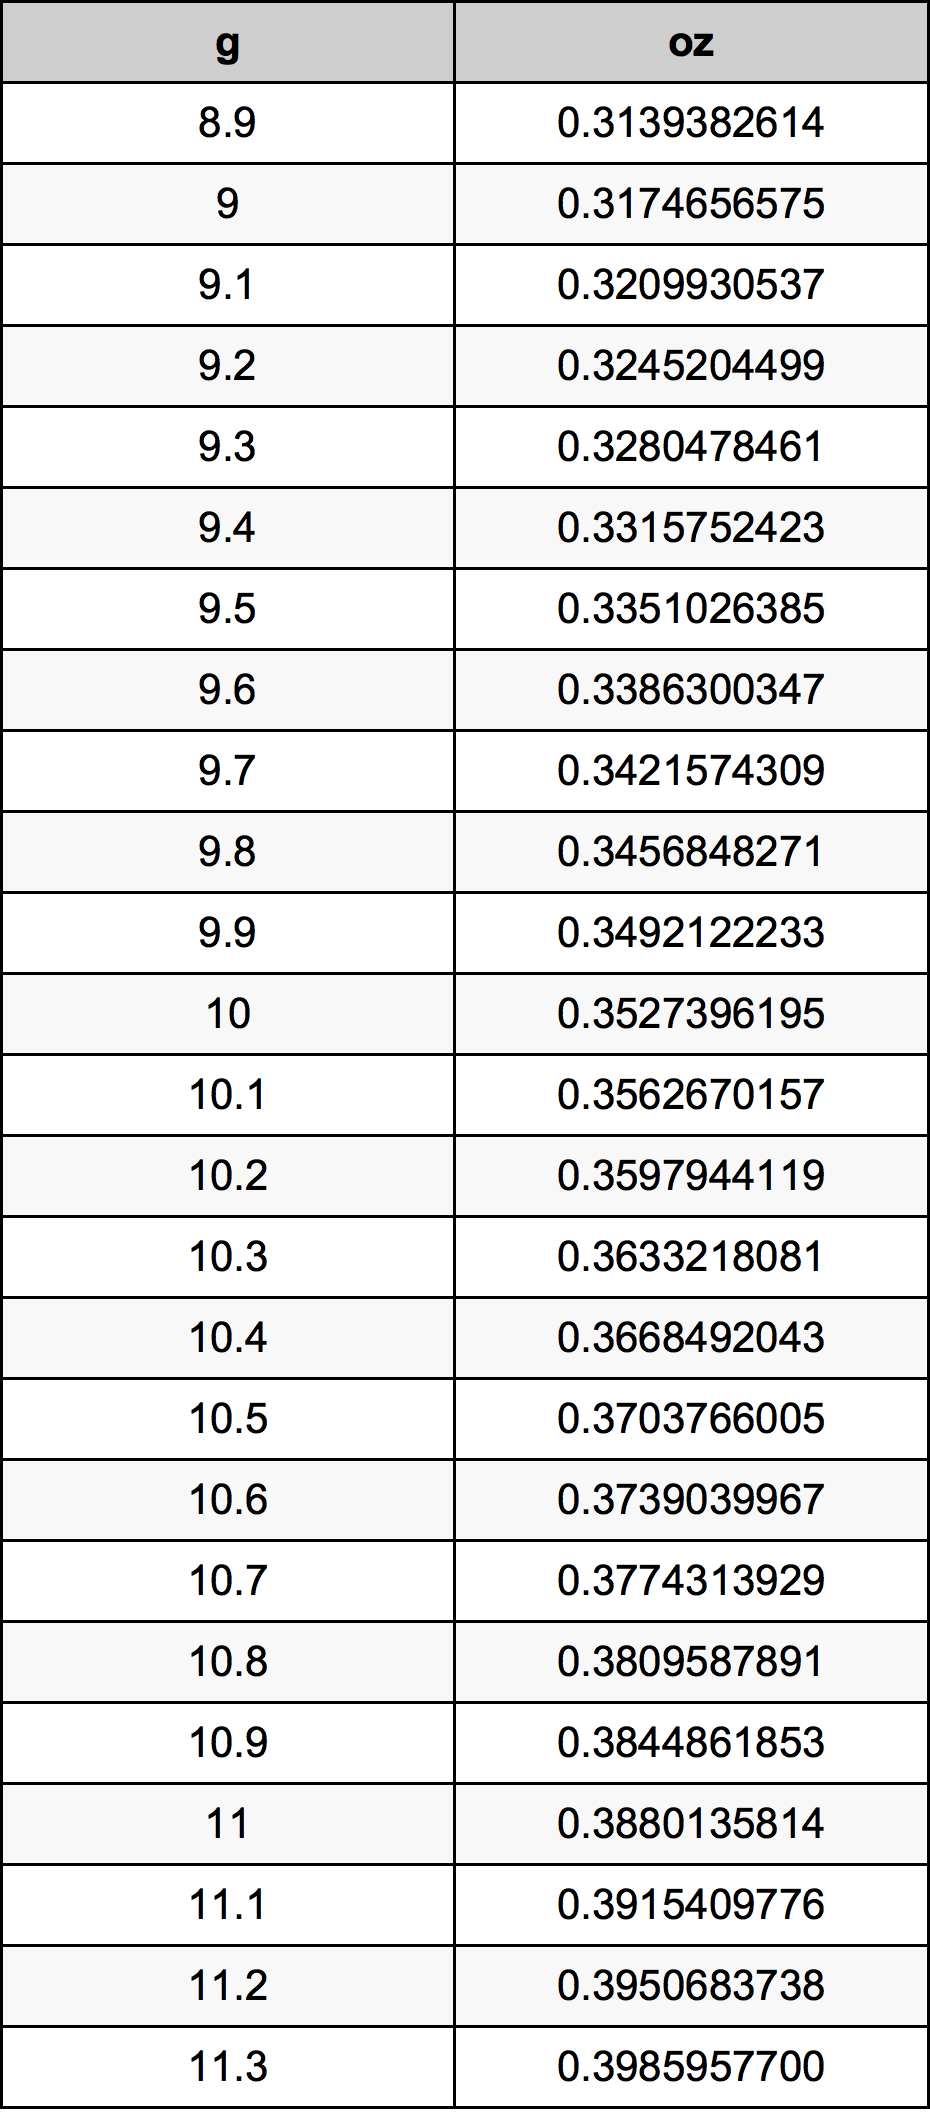 10.1 غرام جدول تحويل